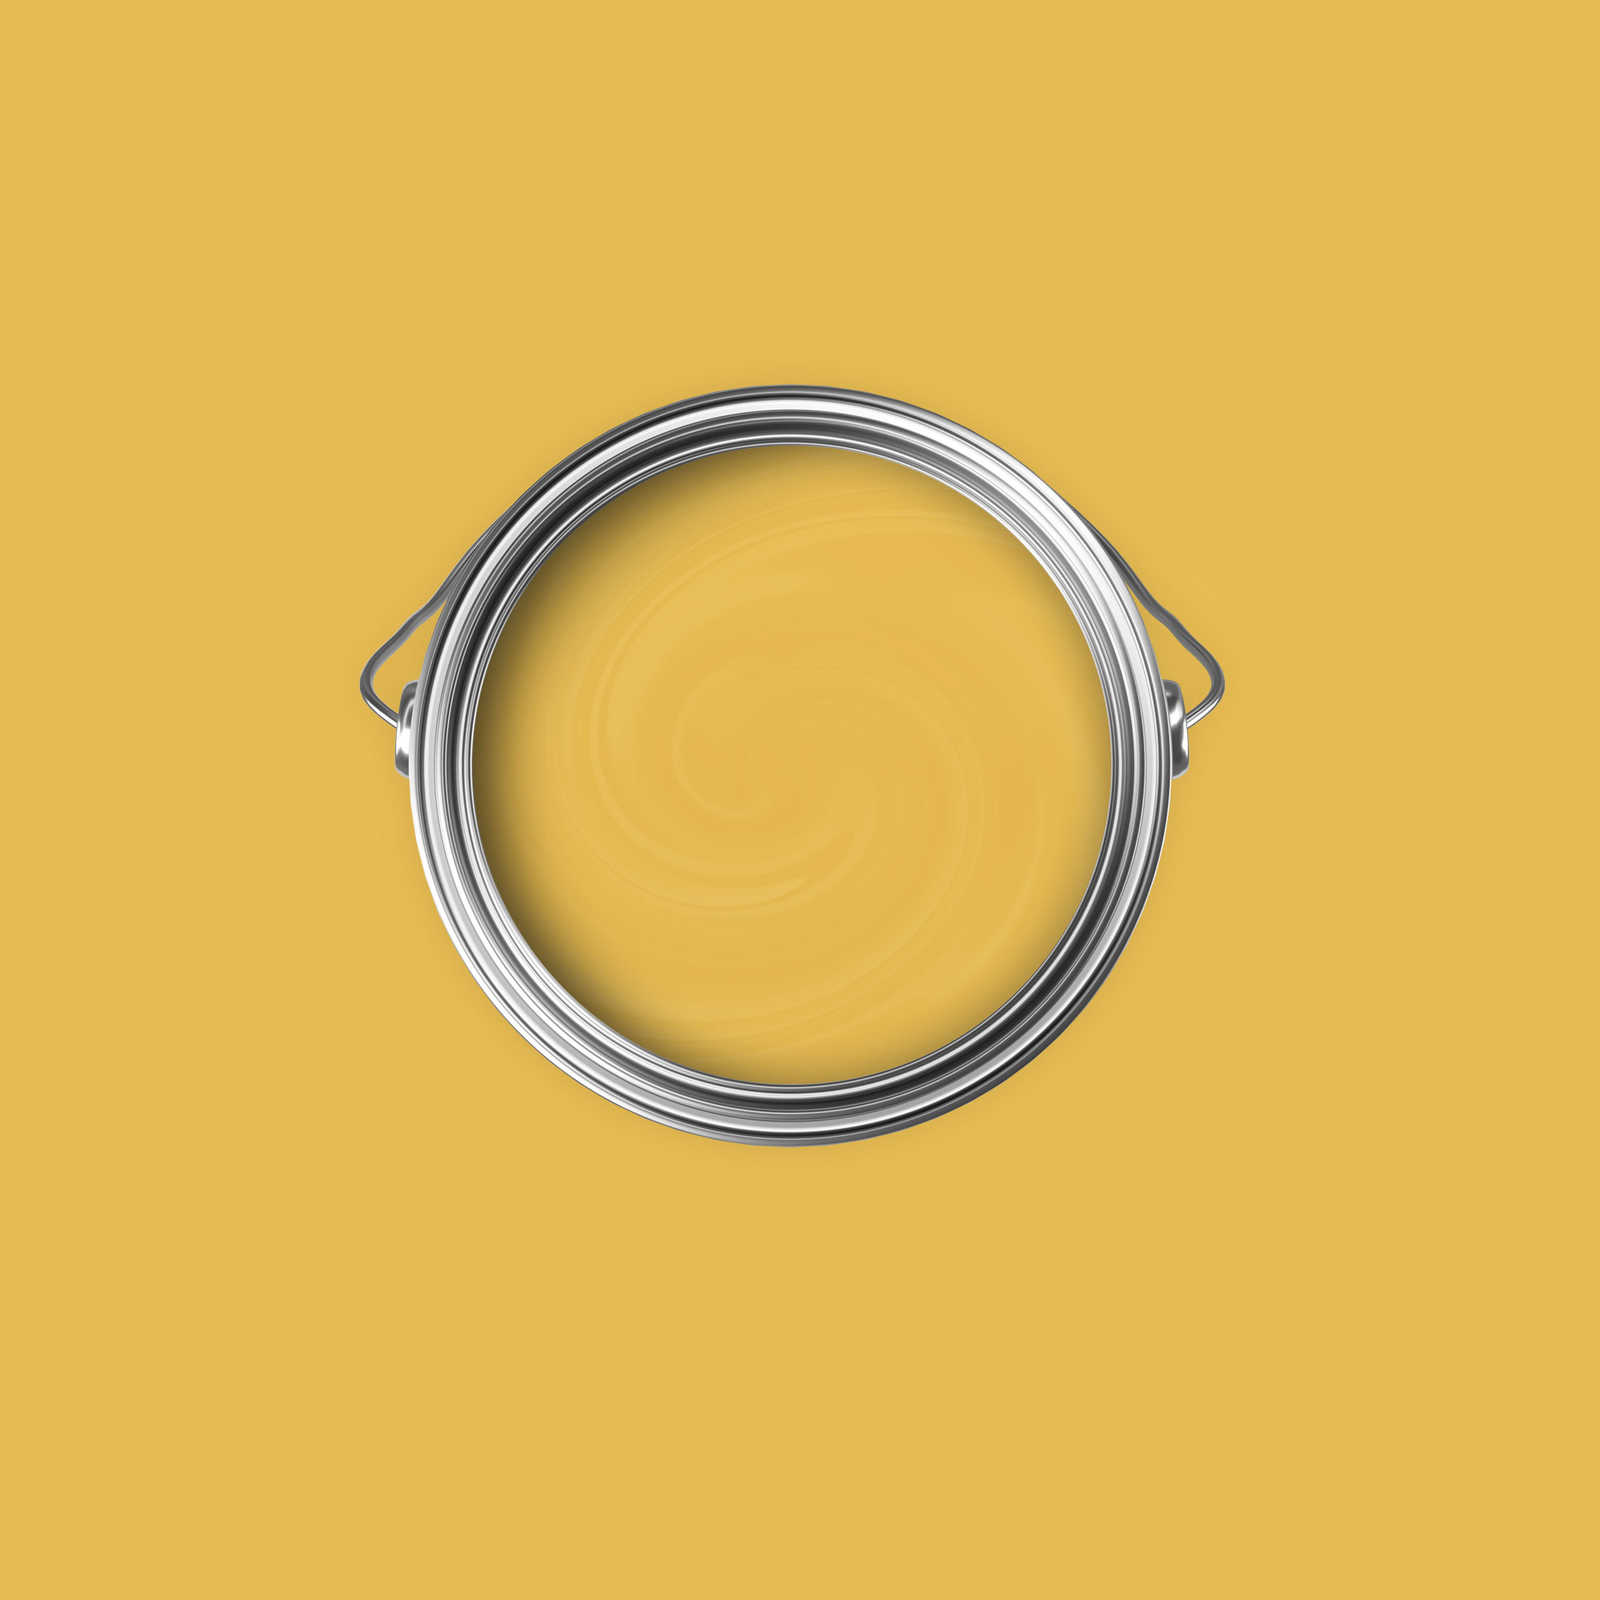             Premium Wall Paint Active Vanilla »Juicy Yellow« NW803 – 2.5 litre
        